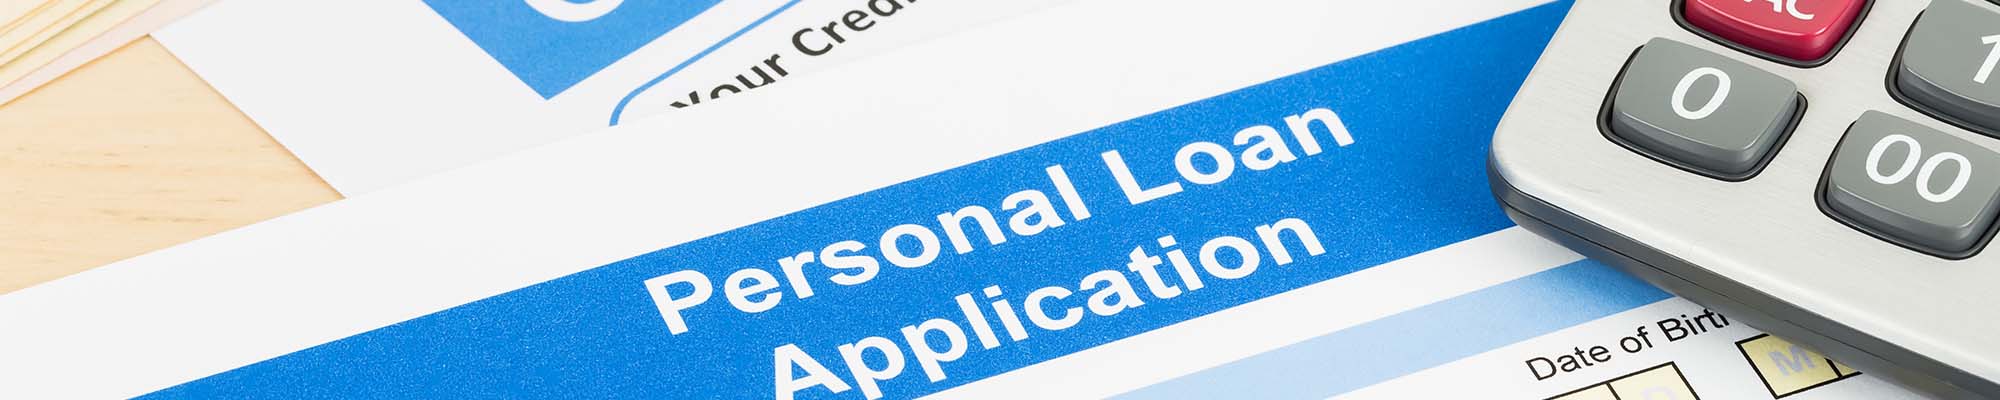 Personal loans